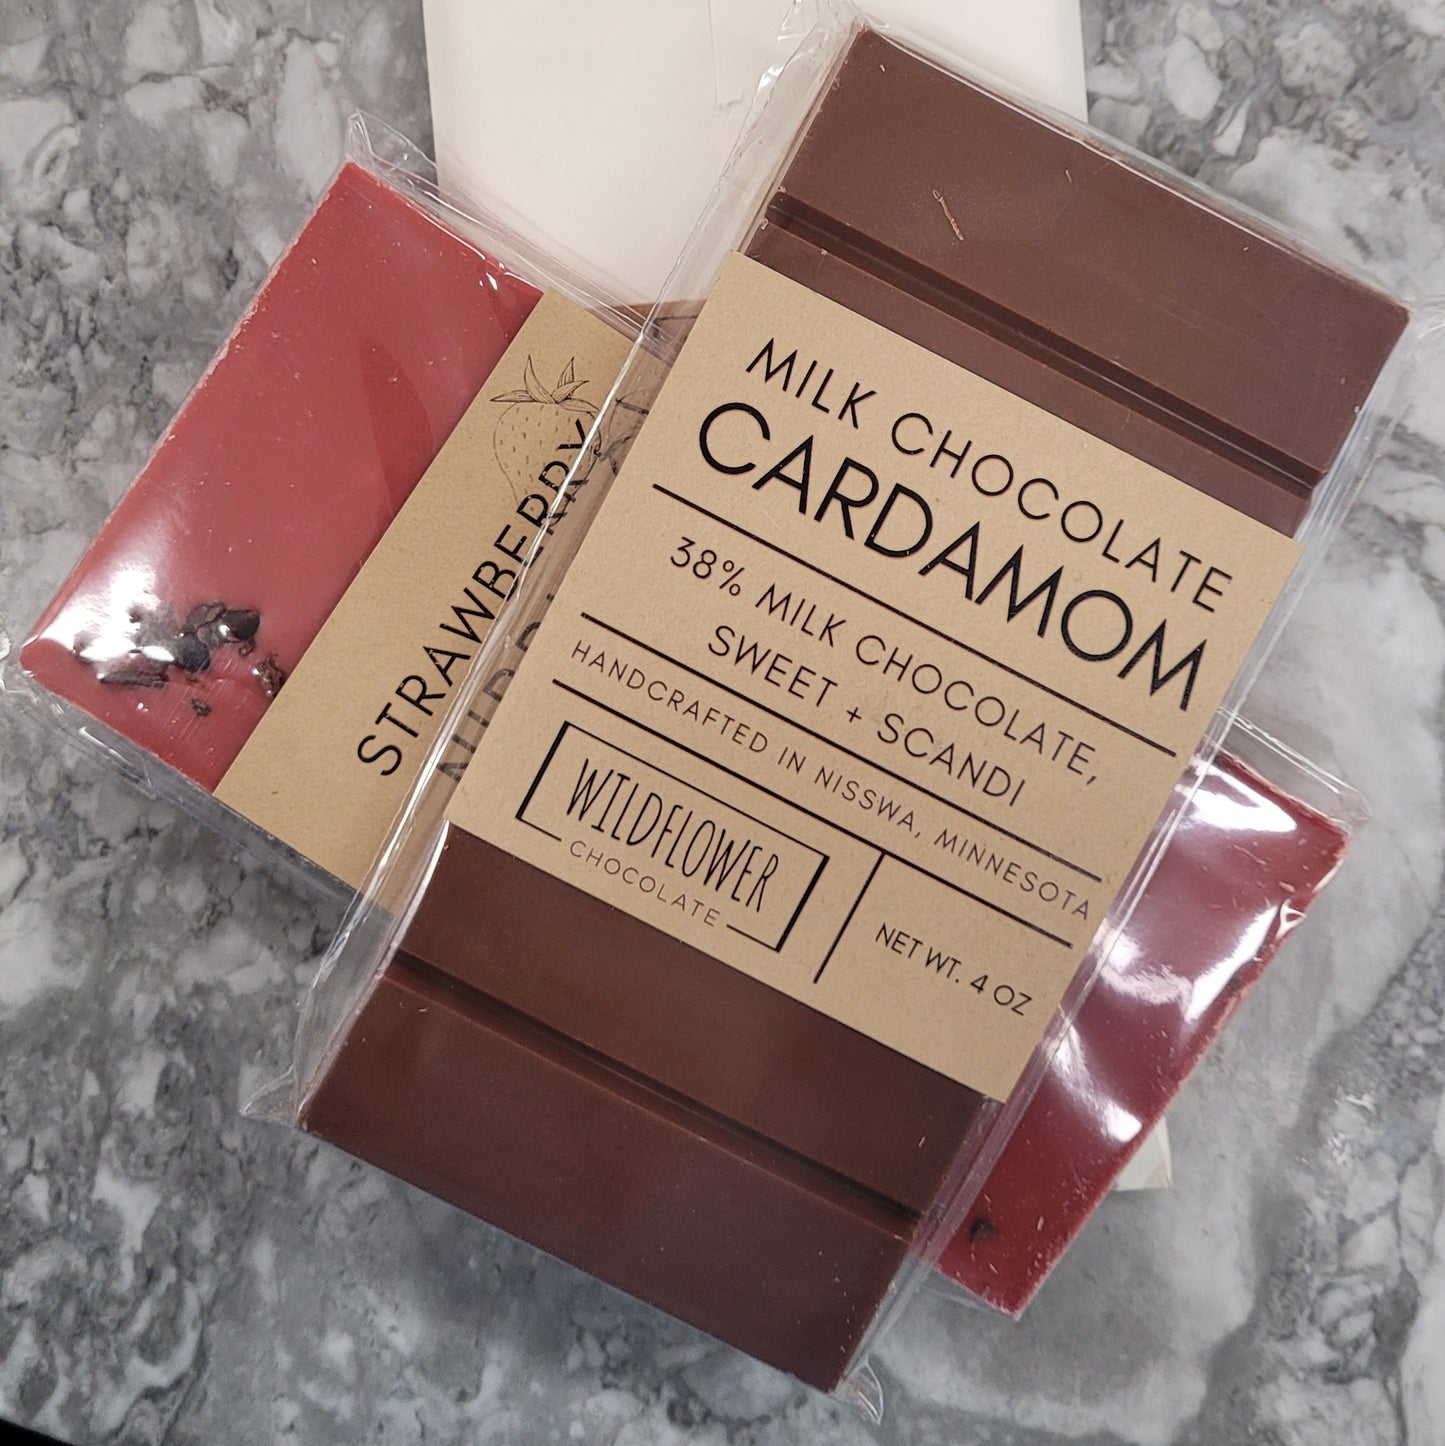 Milk Chocolate Cardamom